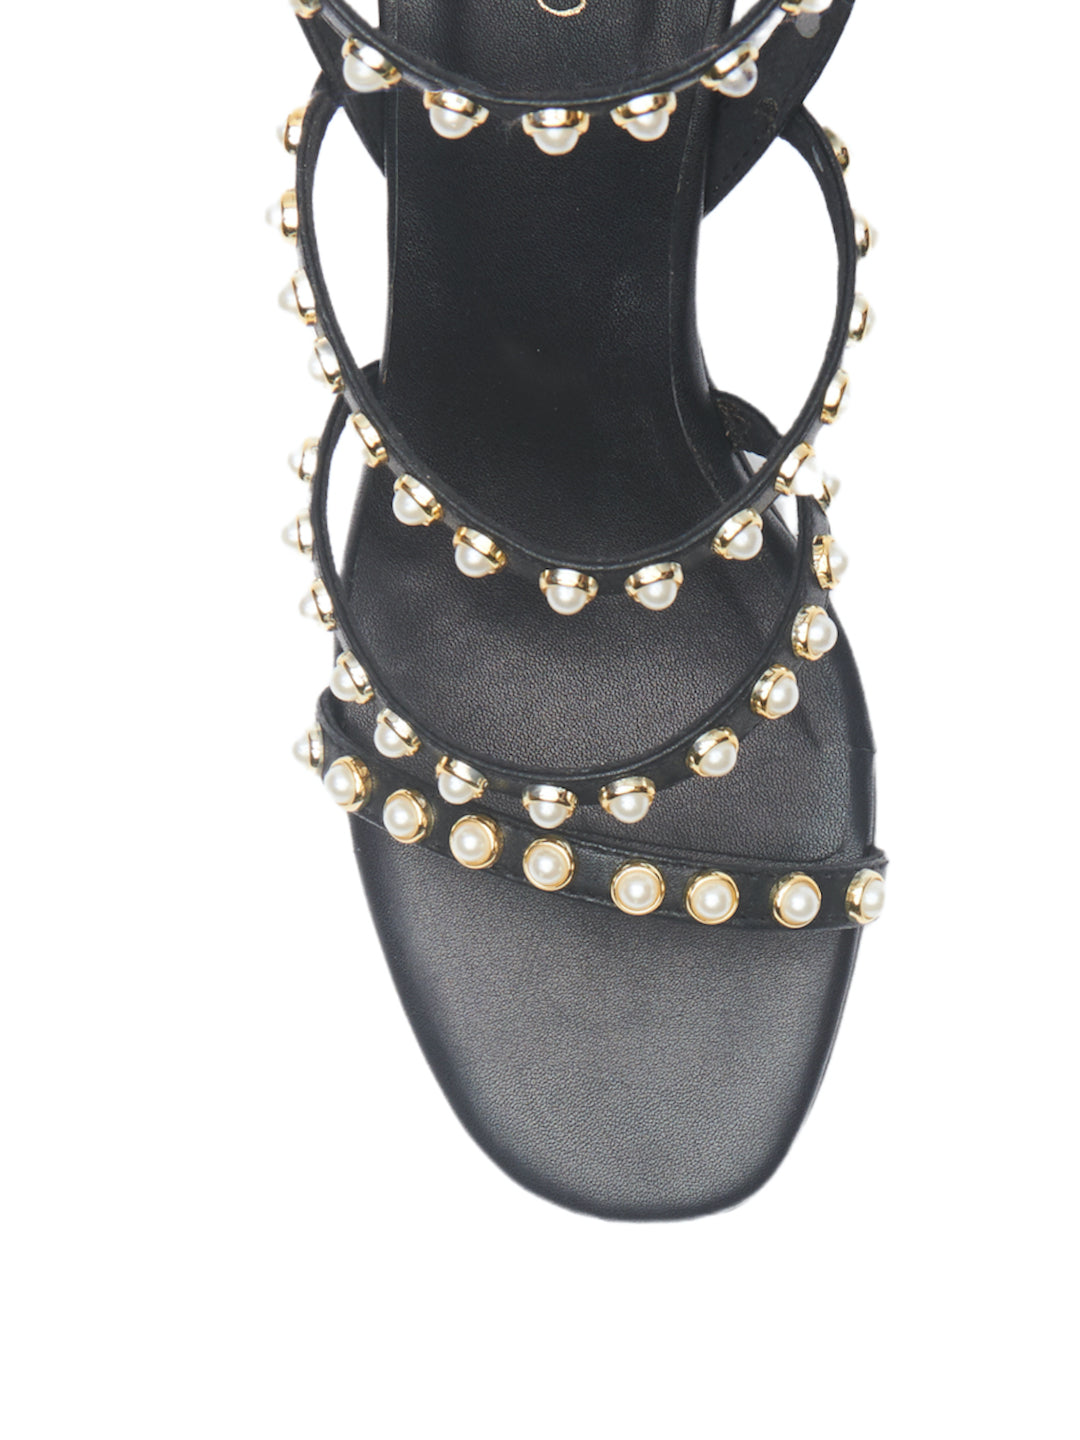 Buy Women Black Casual Gladiators Online | SKU: 33-467-11-36-Metro Shoes